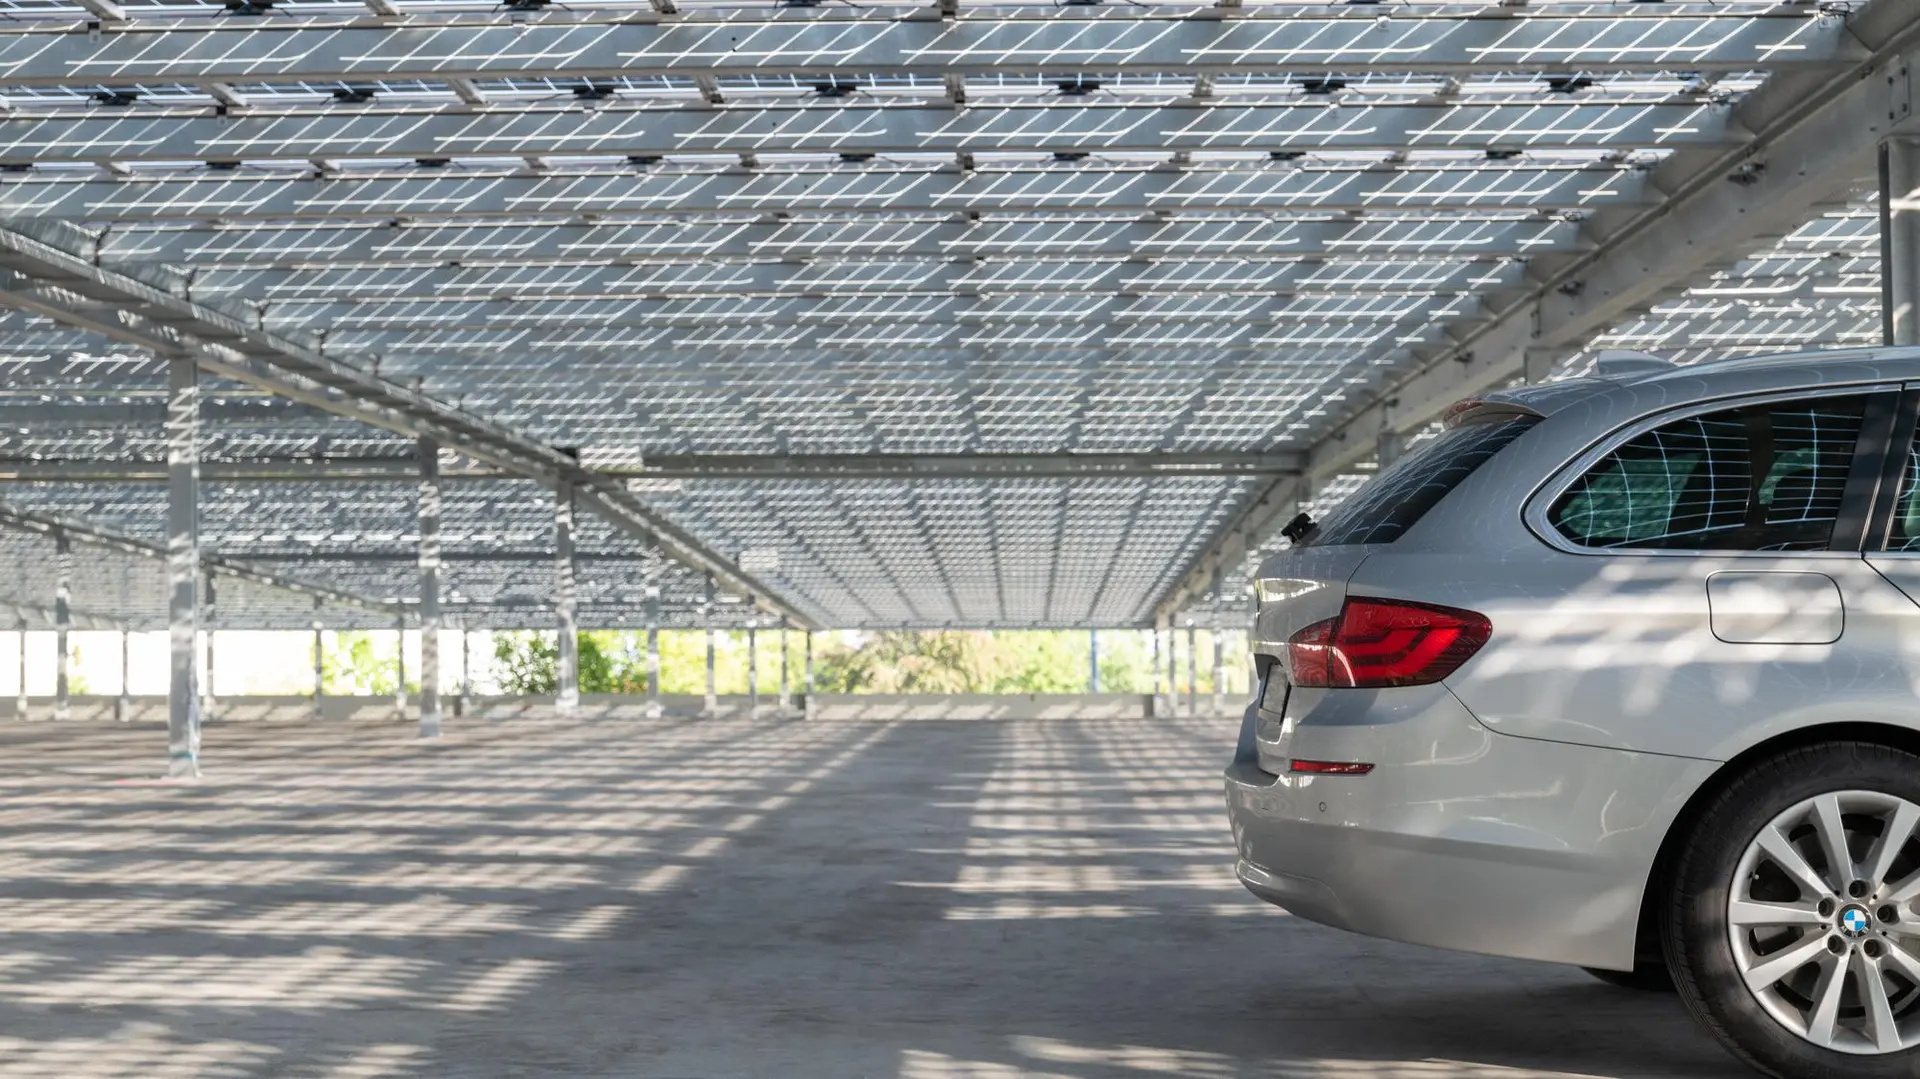 Solar-Carport mit Solarwatt Panel vision construct 